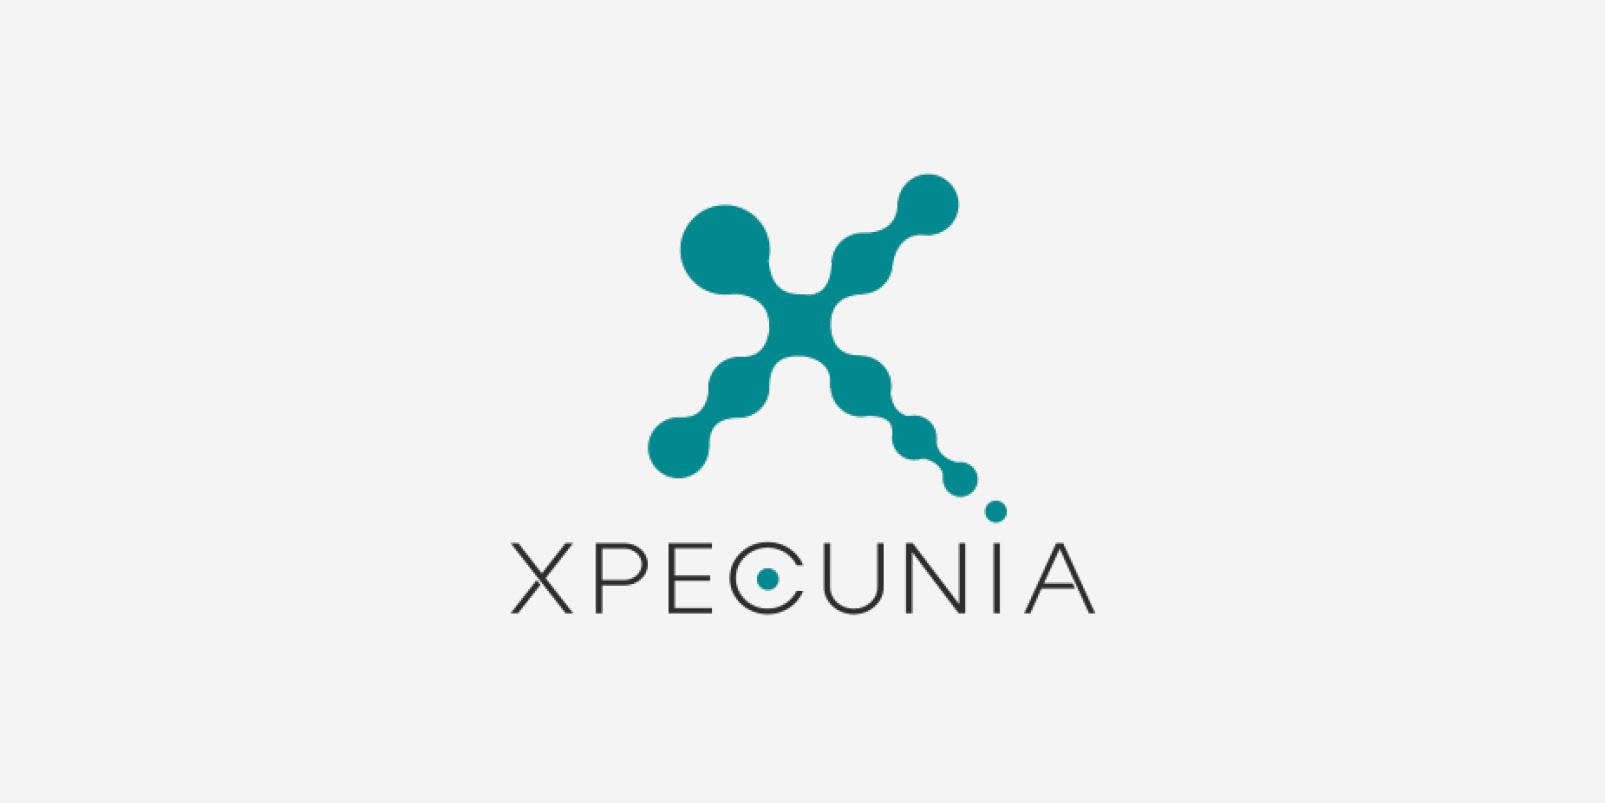 Xpecunia - Nordic Growth Market - Börse Stuttgart